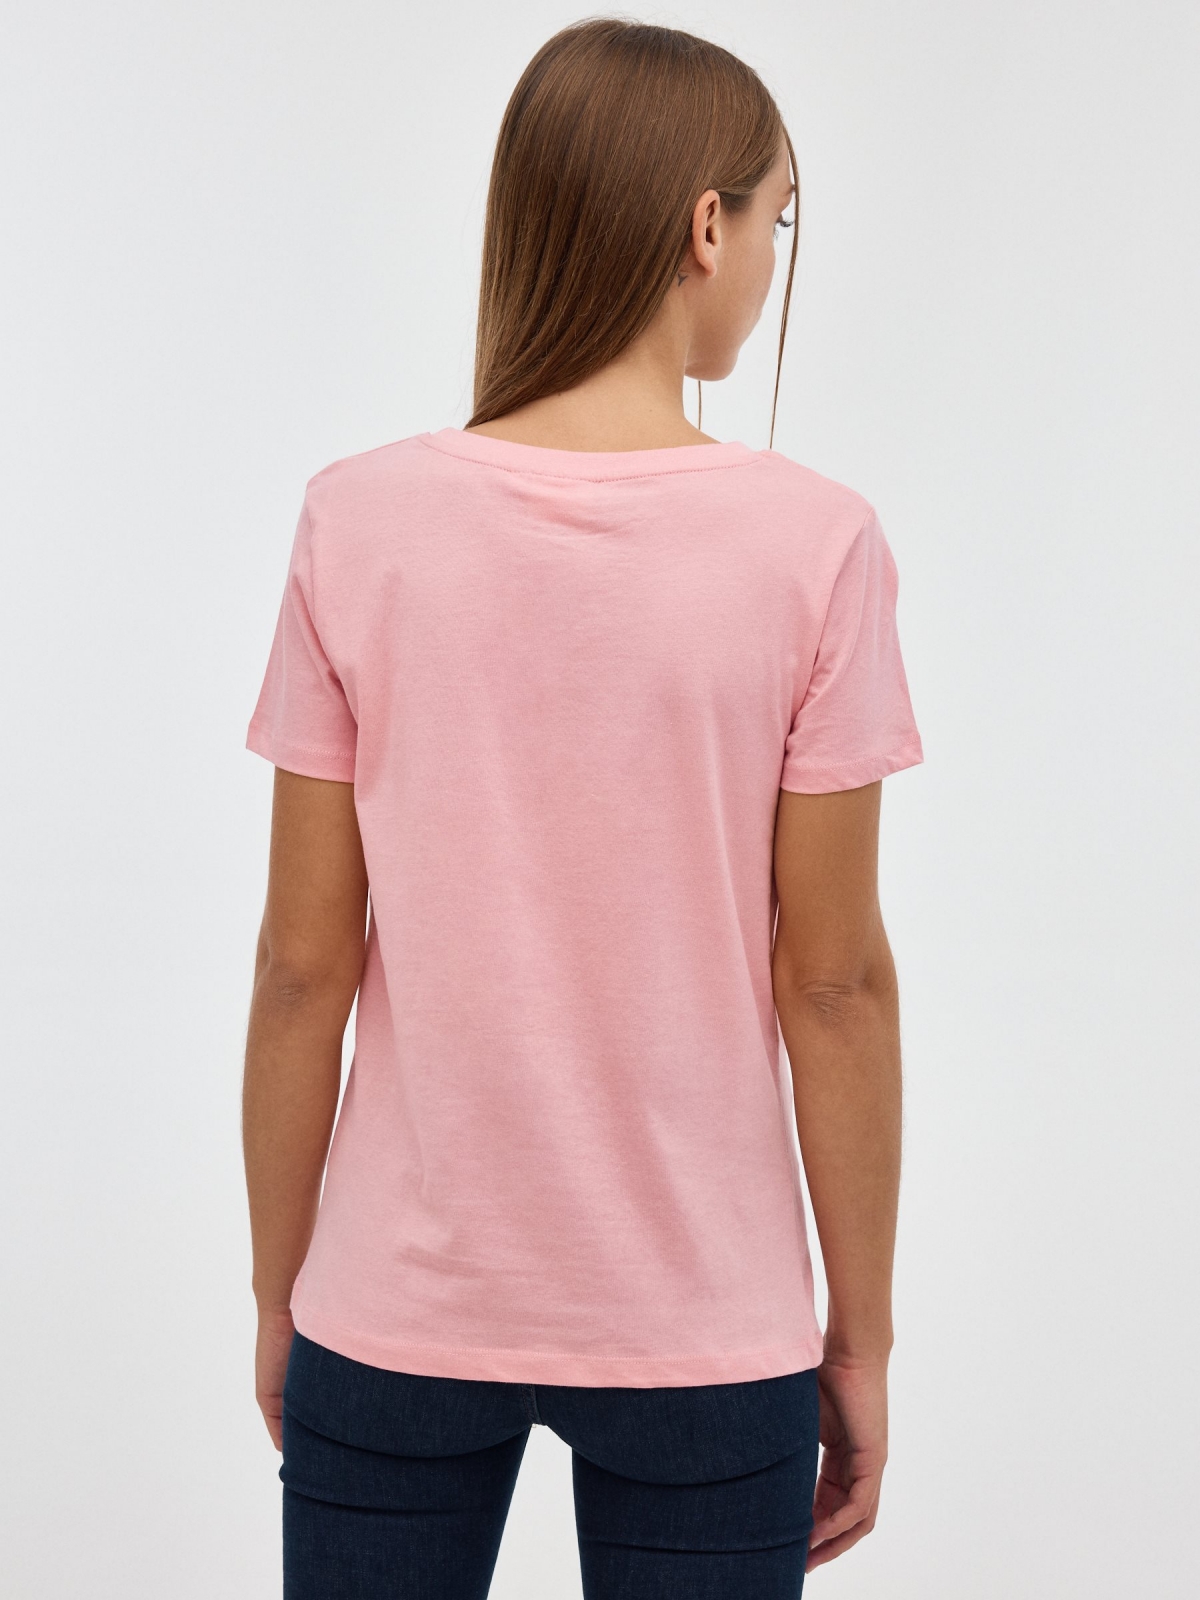 Demon Slayer T-shirt light pink middle back view